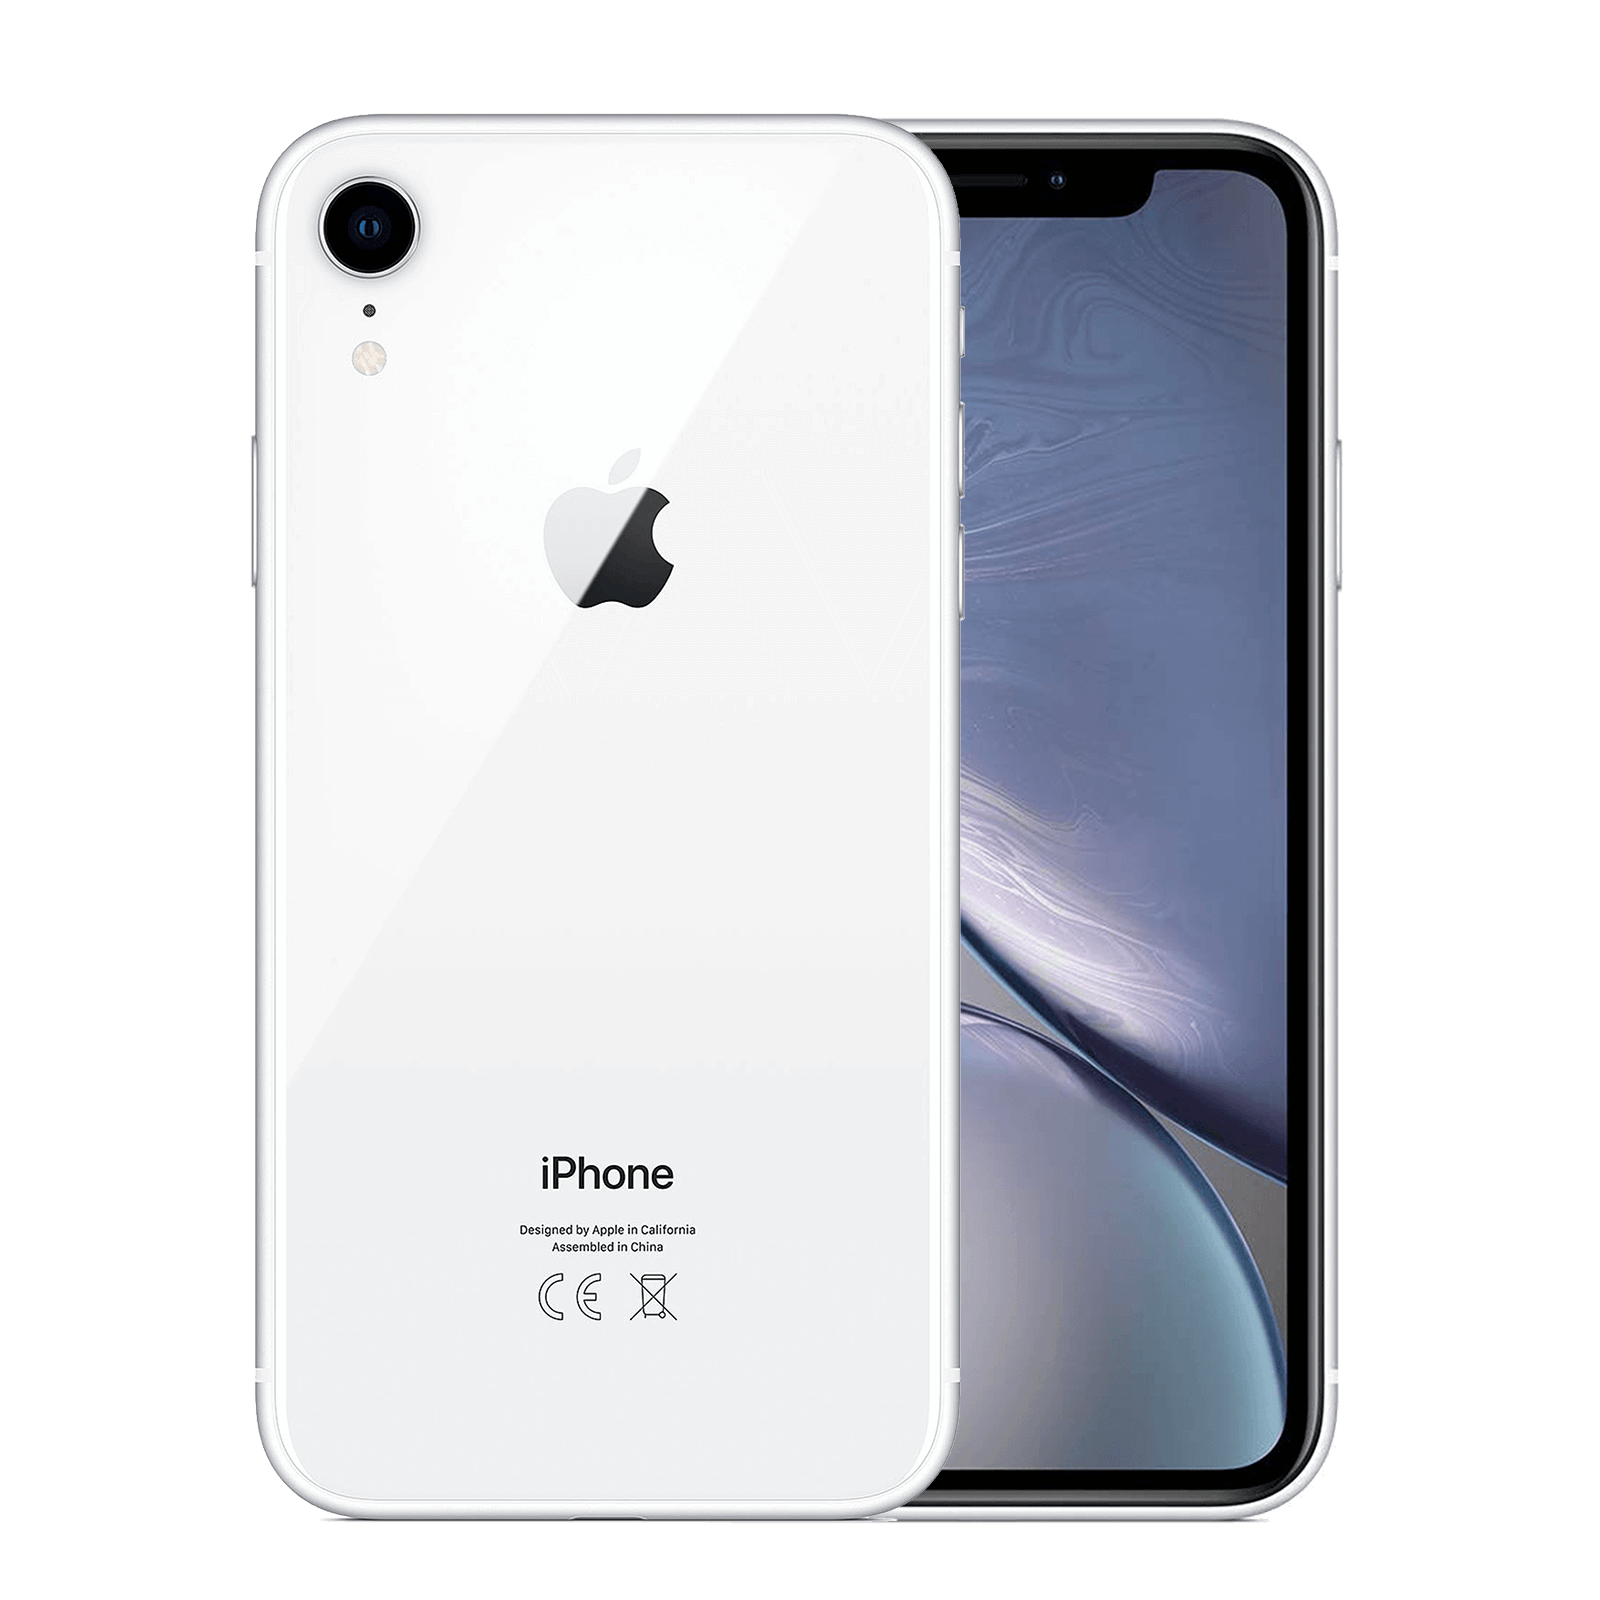 Apple iPhone XR 128GB White Good - Unlocked